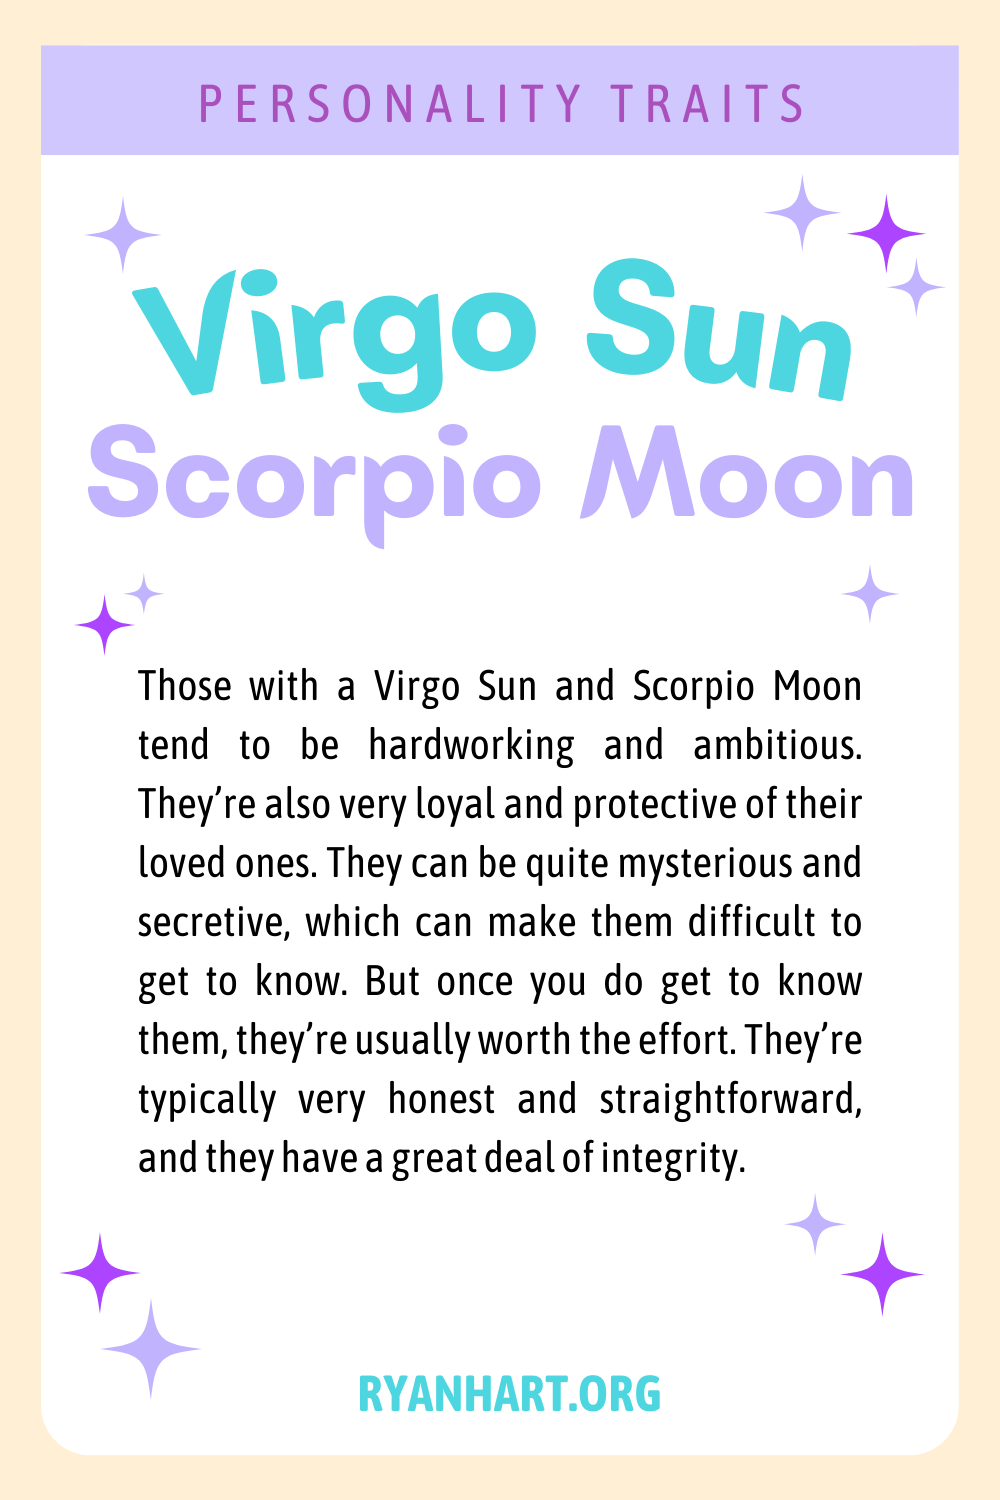 Virgo Sun Scorpio Moon Description